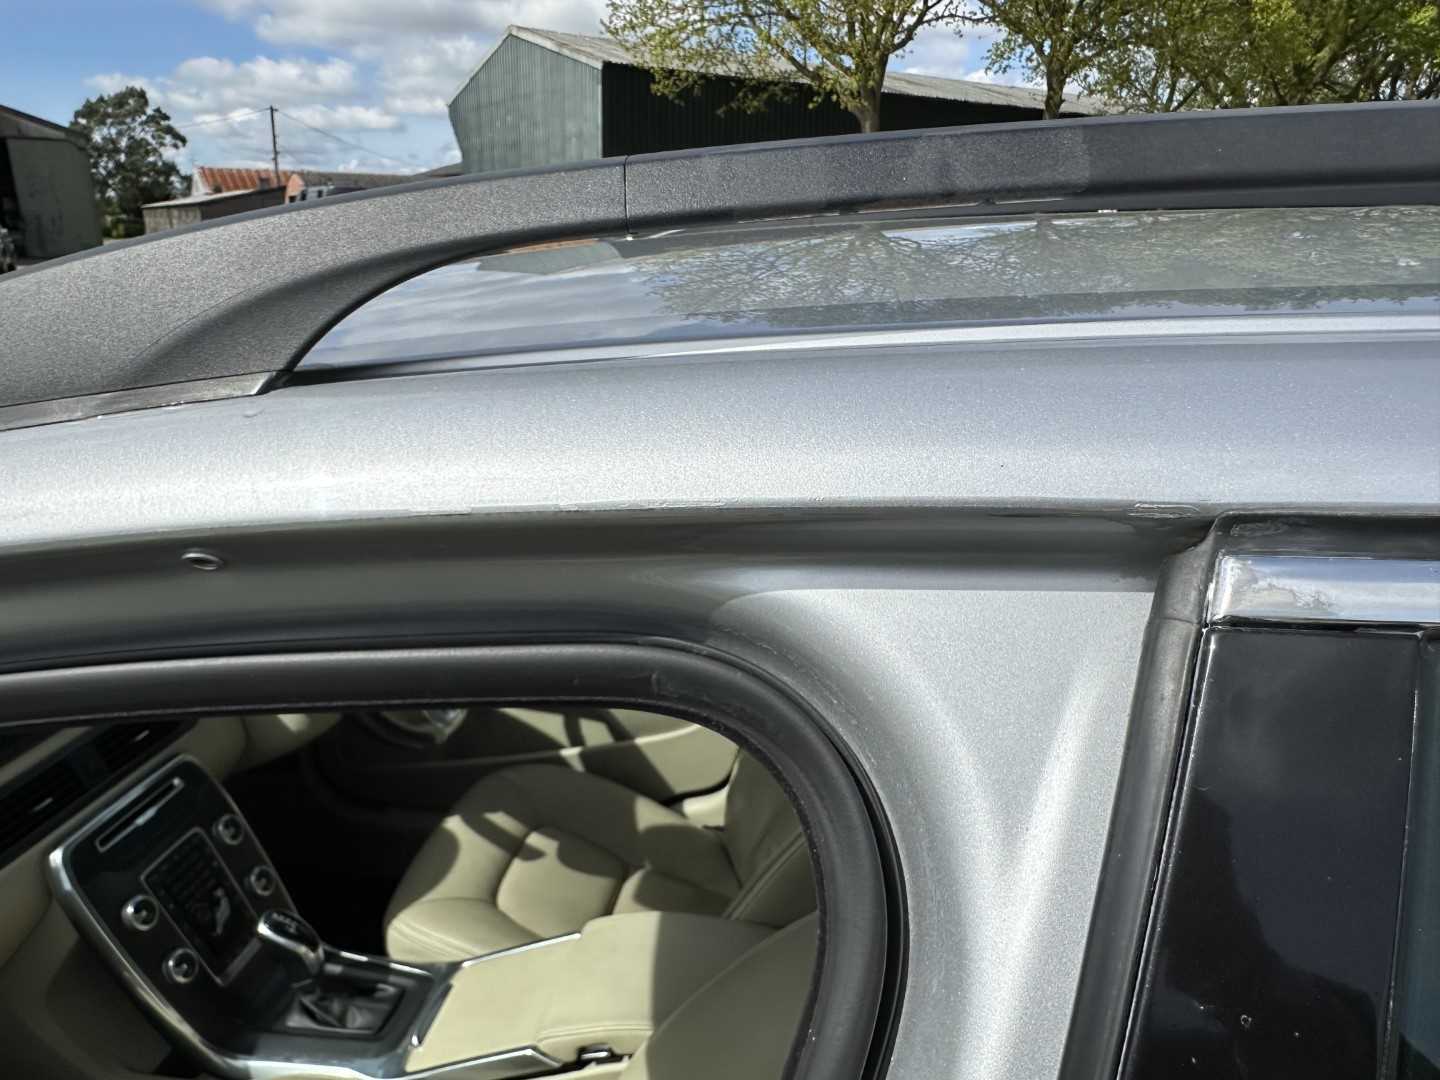 2014 Volvo XC70 SE Lux D5 AWD automatic, 5 door estate, reg. no. KS14 MFP - Image 22 of 29